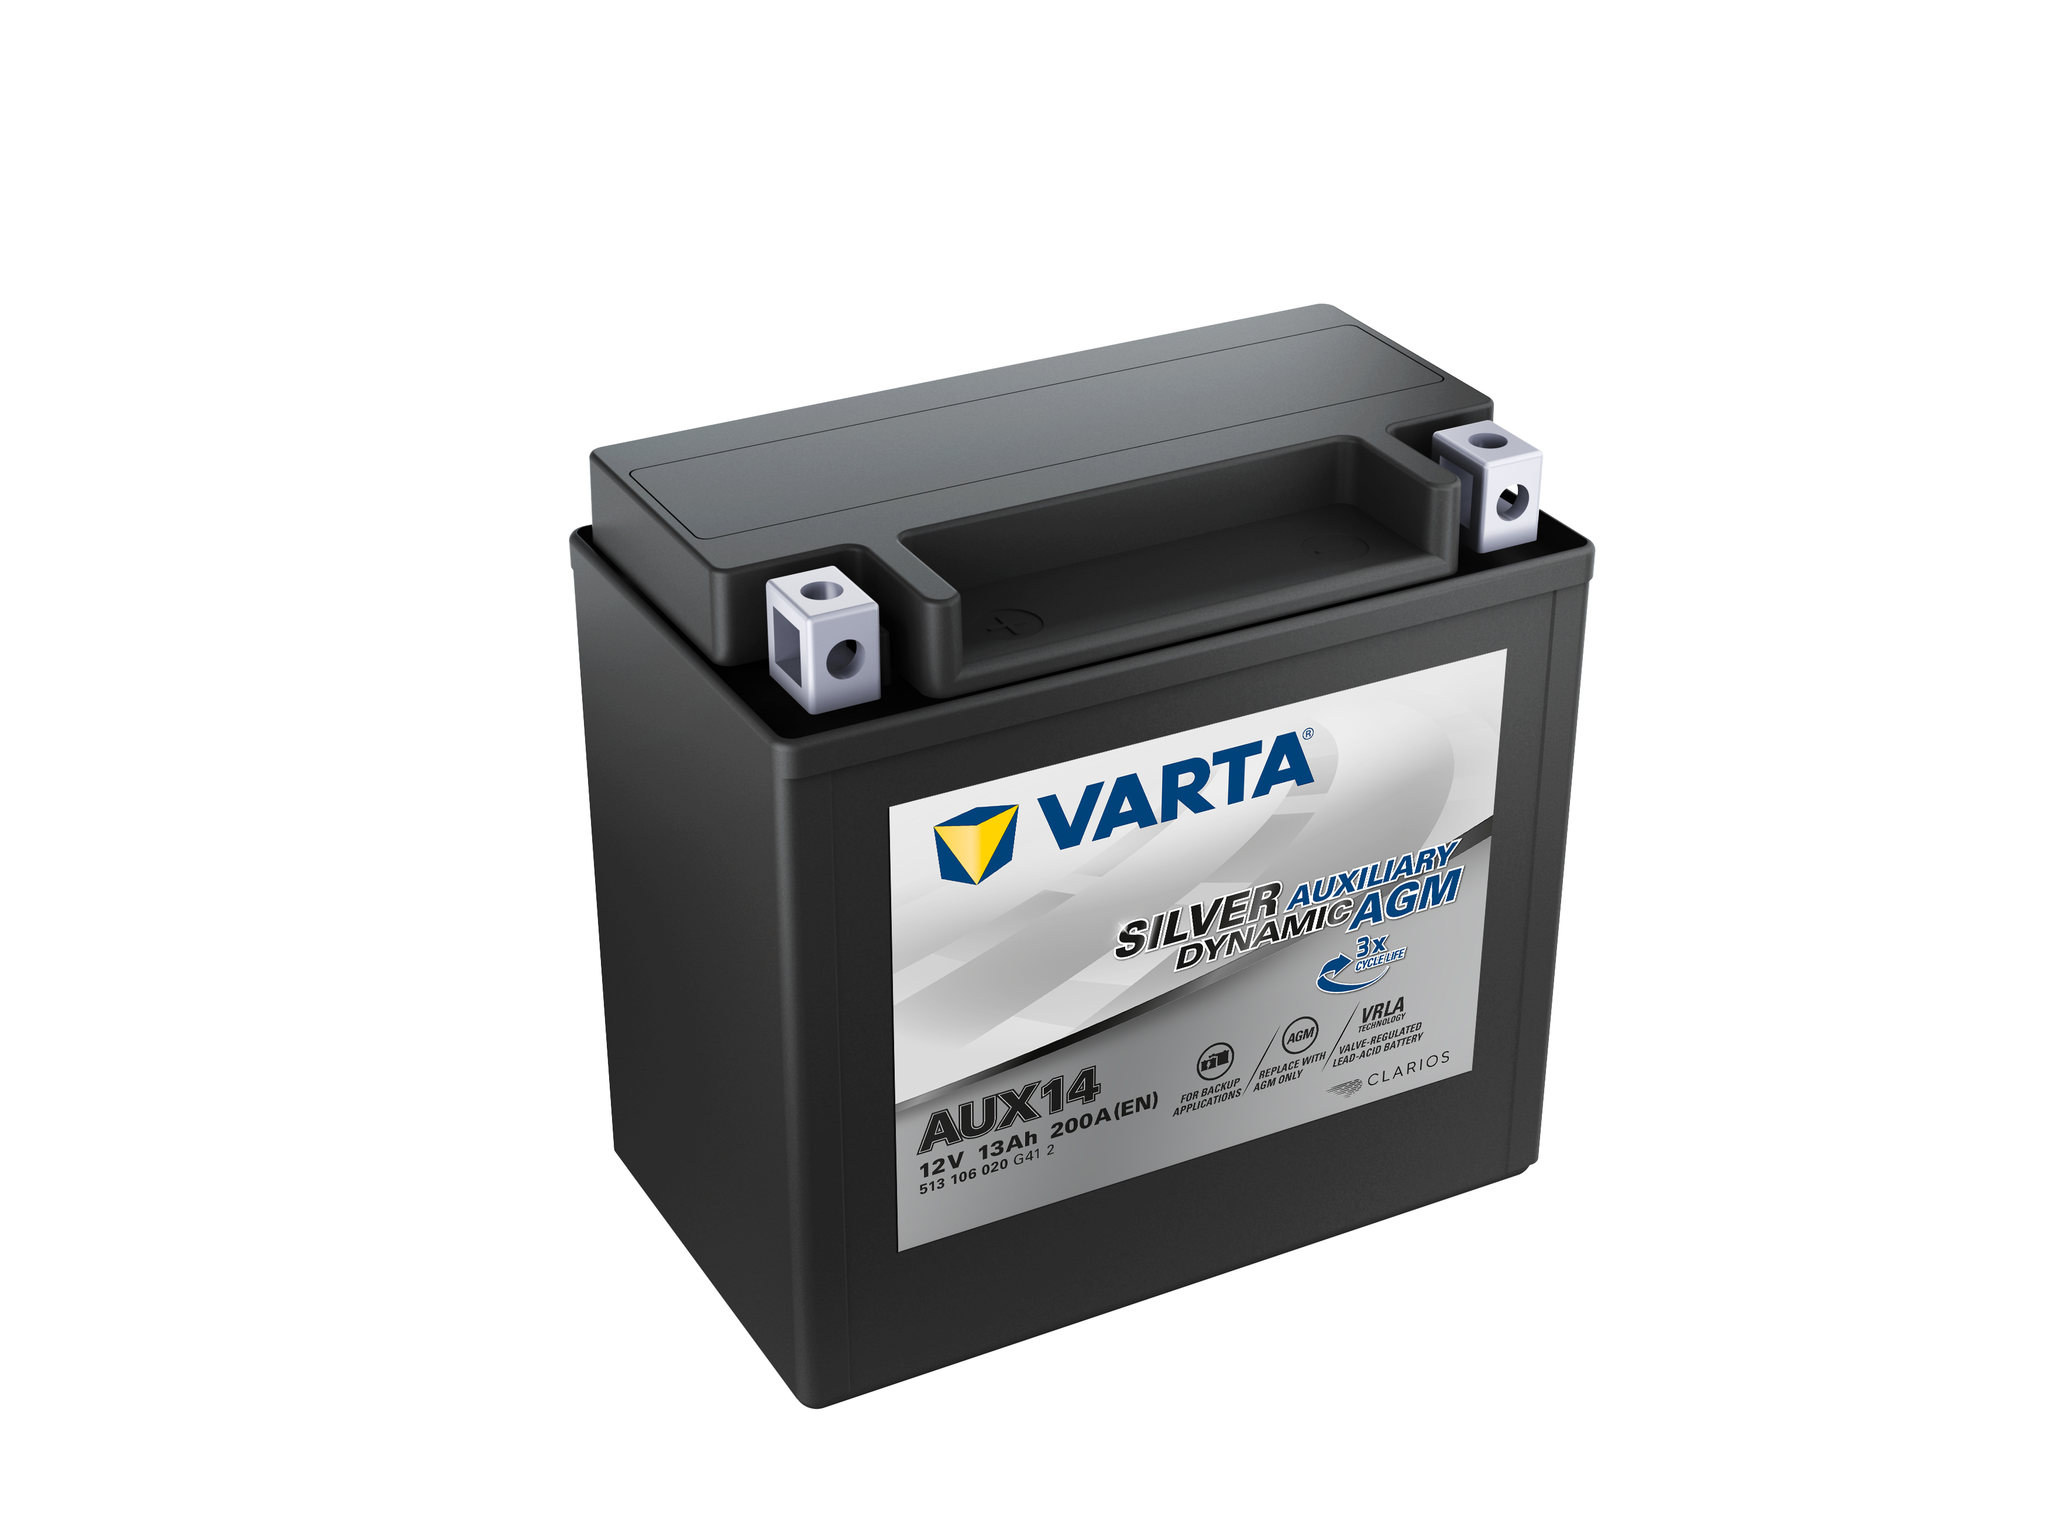 VARTA AUX Silver Dynamic Auxiliary AGM    V Ah hulpaccu